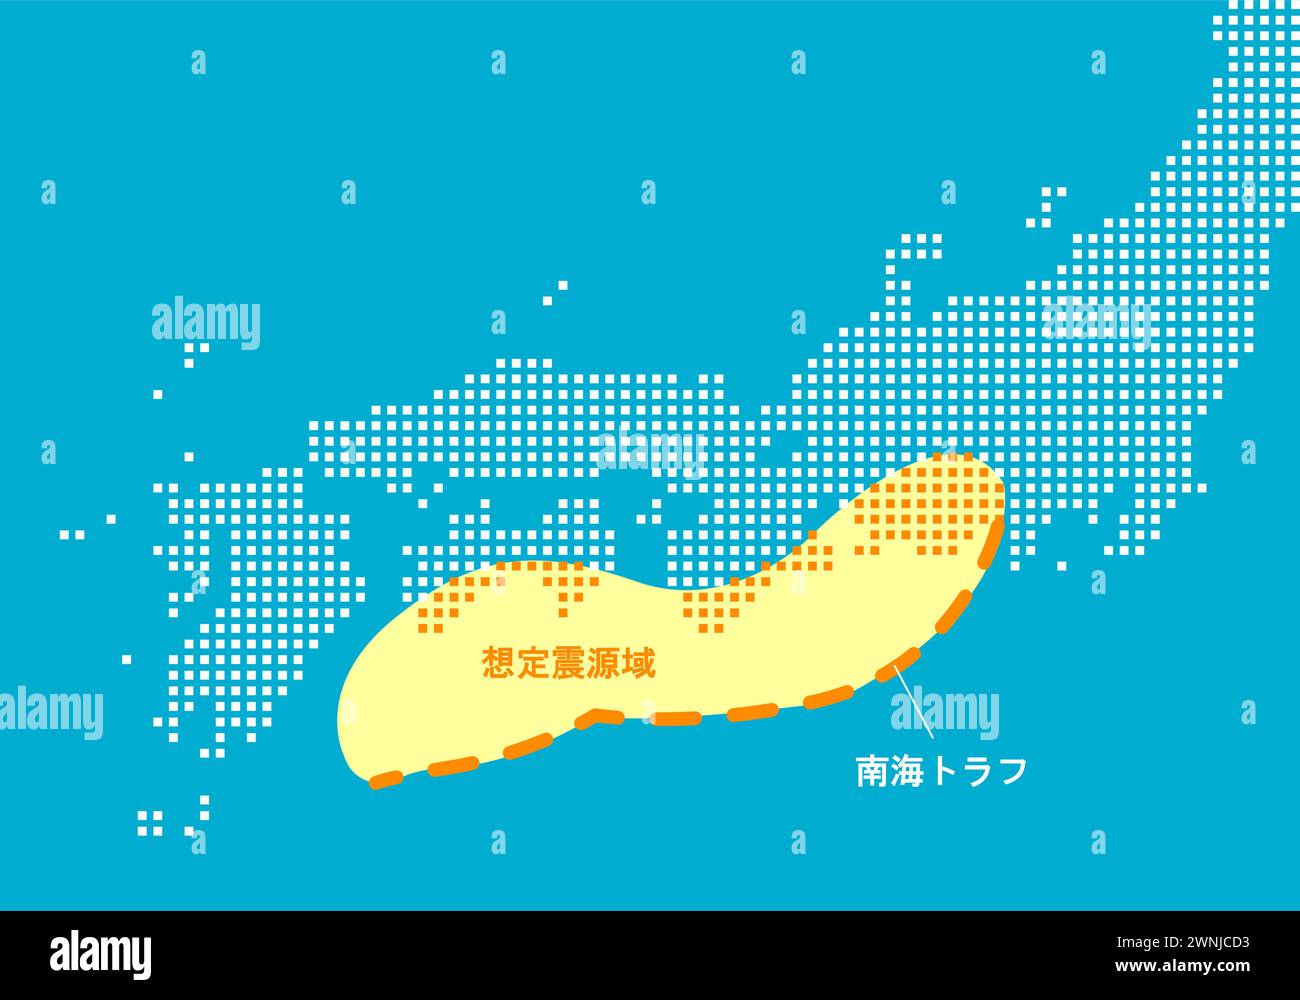 Hypozentrale Landkarte des Nankai-Trogbebens. Stock Vektor